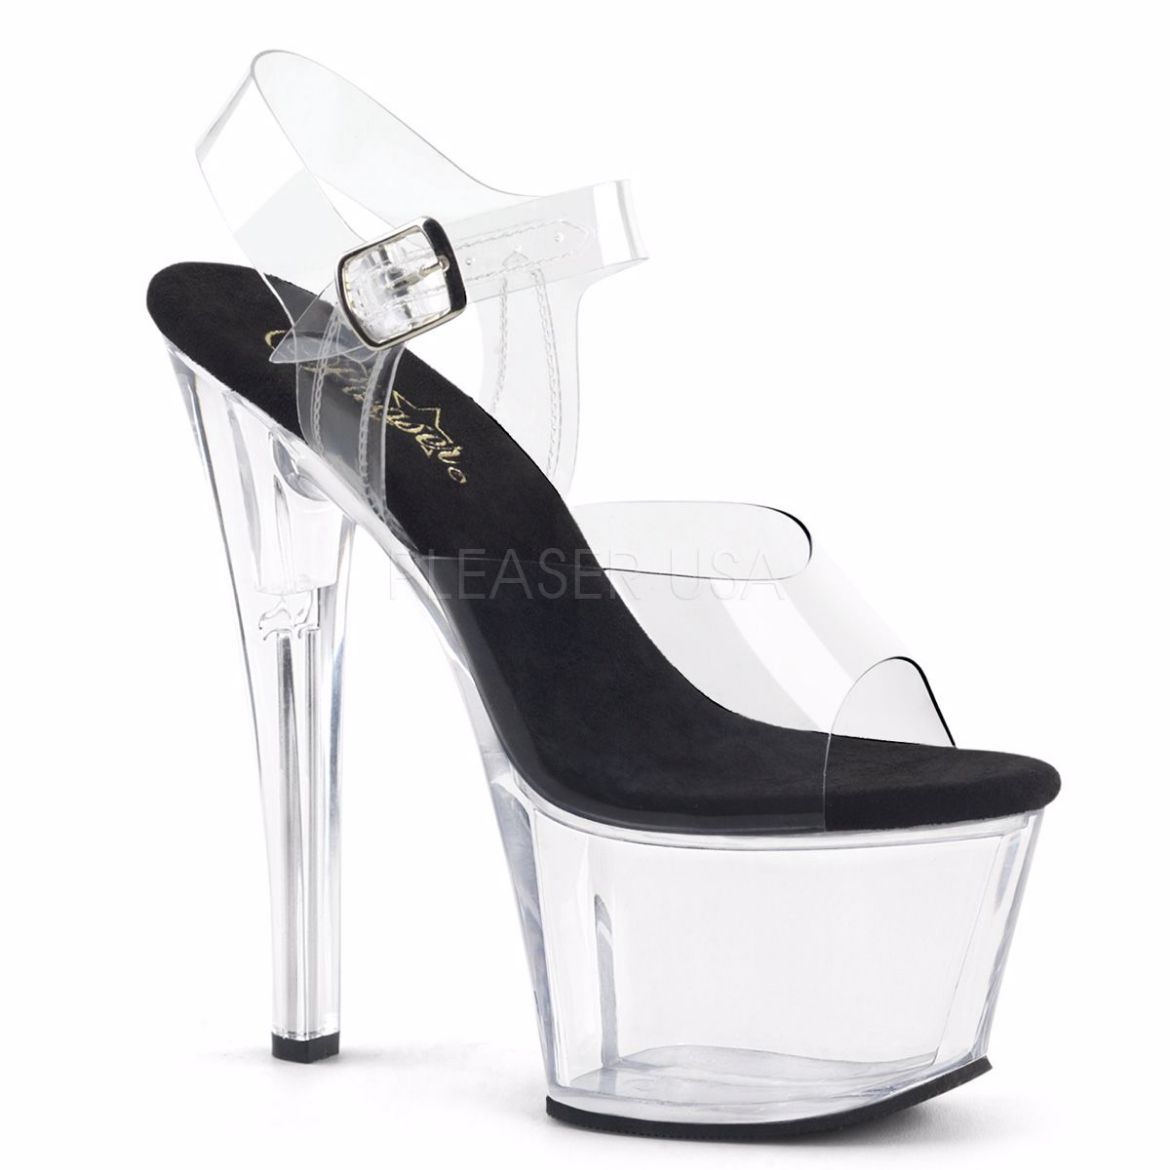 Product image of Pleaser Sky-308 Clear-Black/Clear, 7 inch (17.8 cm) Heel, 2 3/4 inch (7 cm) Platform Sandal Shoes